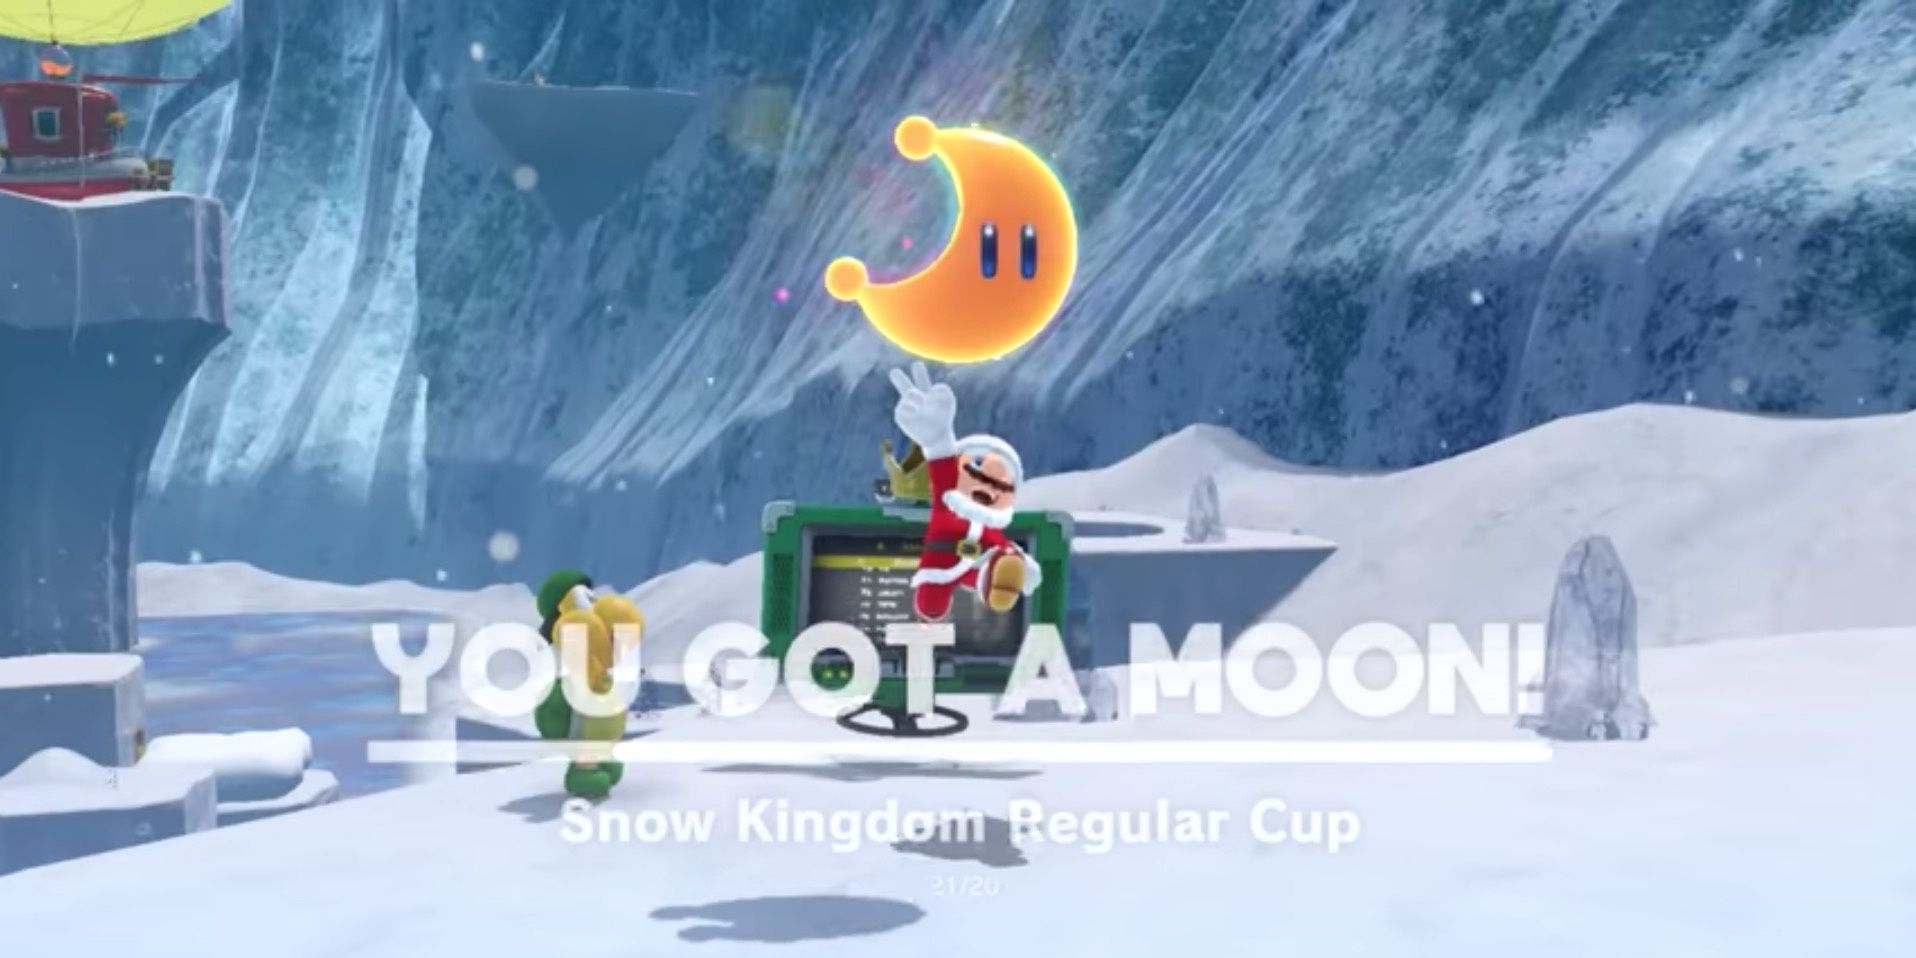 Mario dressed as Santa getting a moon